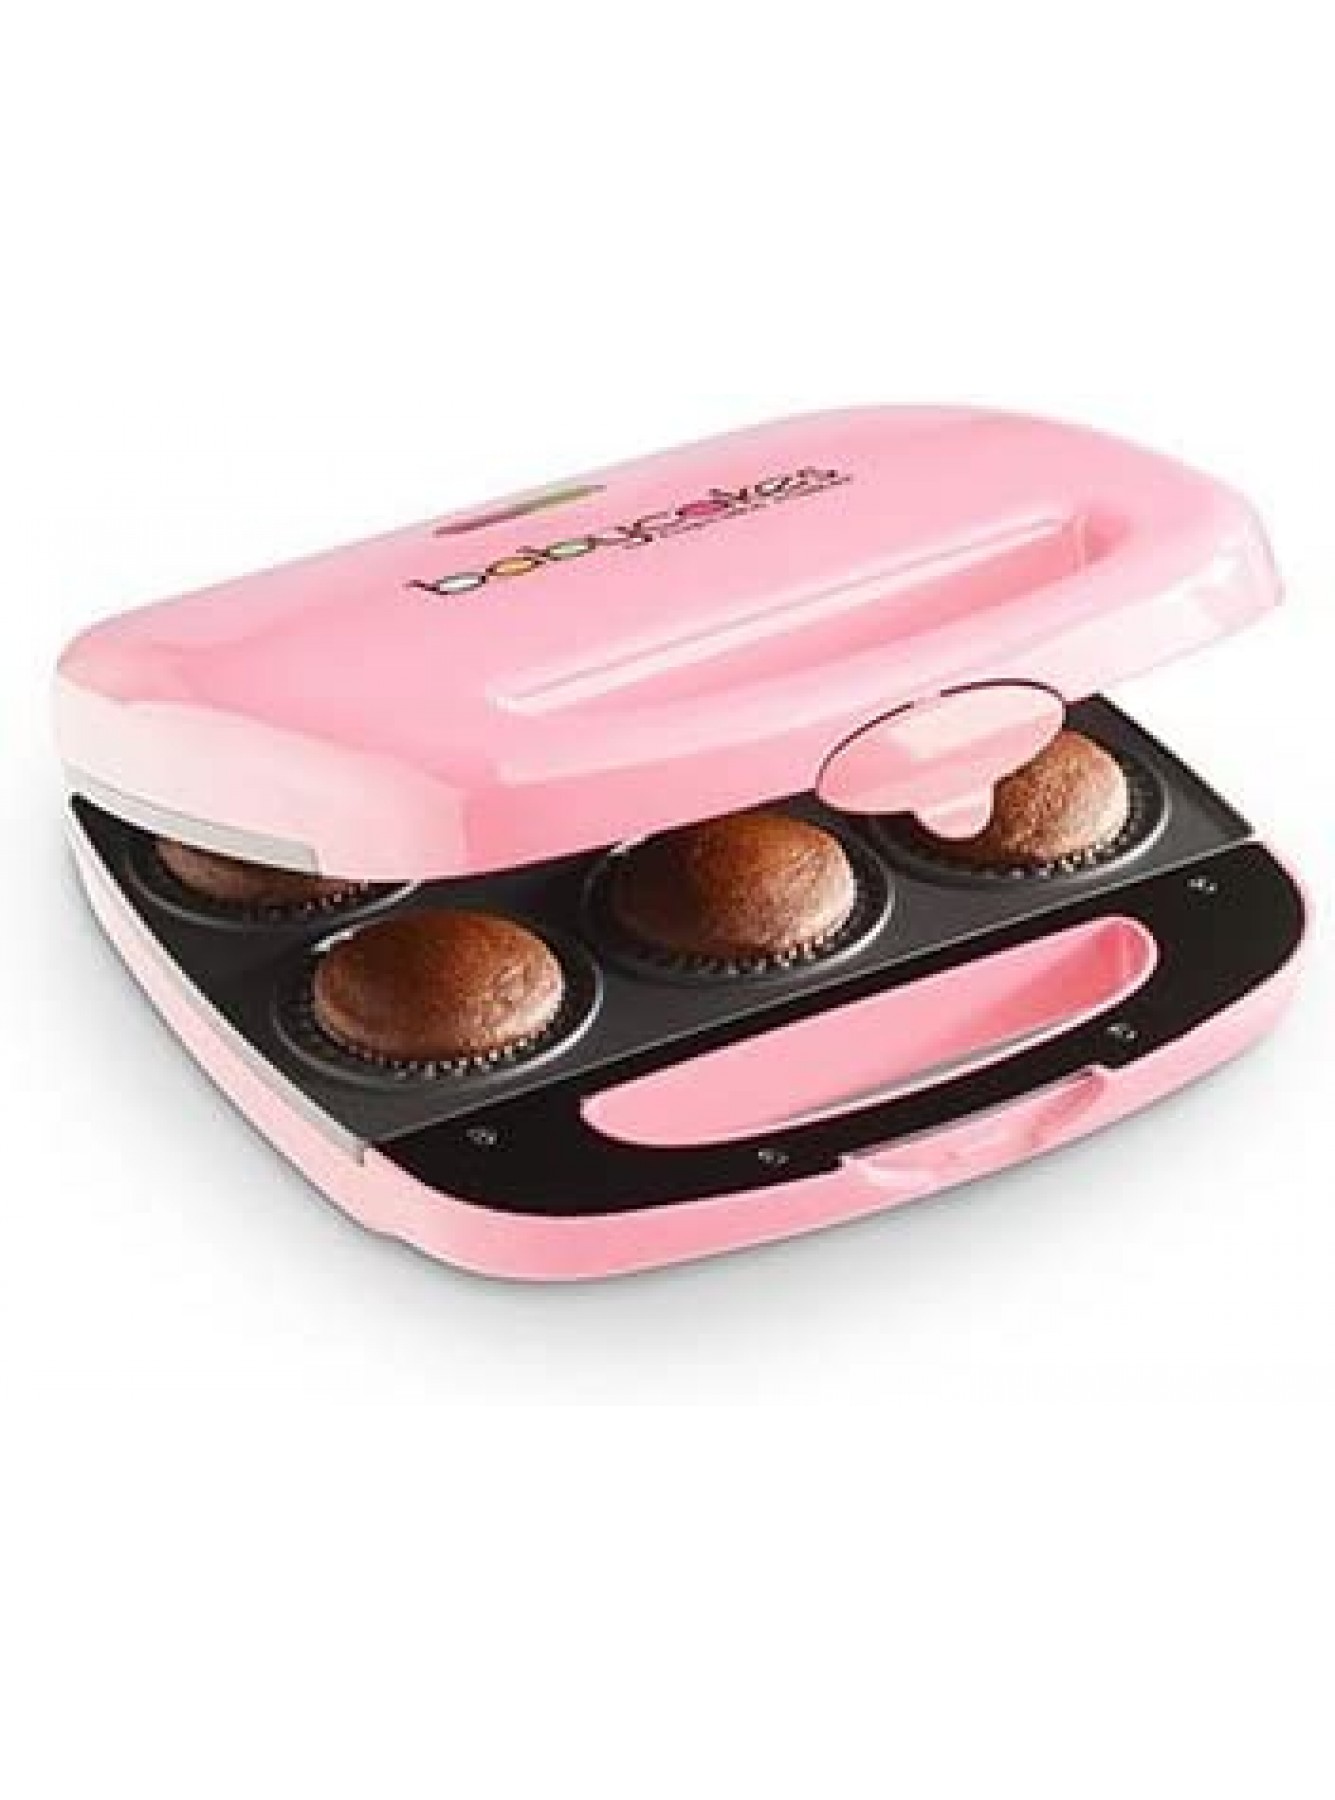 Babycakes Nonstick Coated Mini Cupcake Maker : Pink B00AI1HLLC